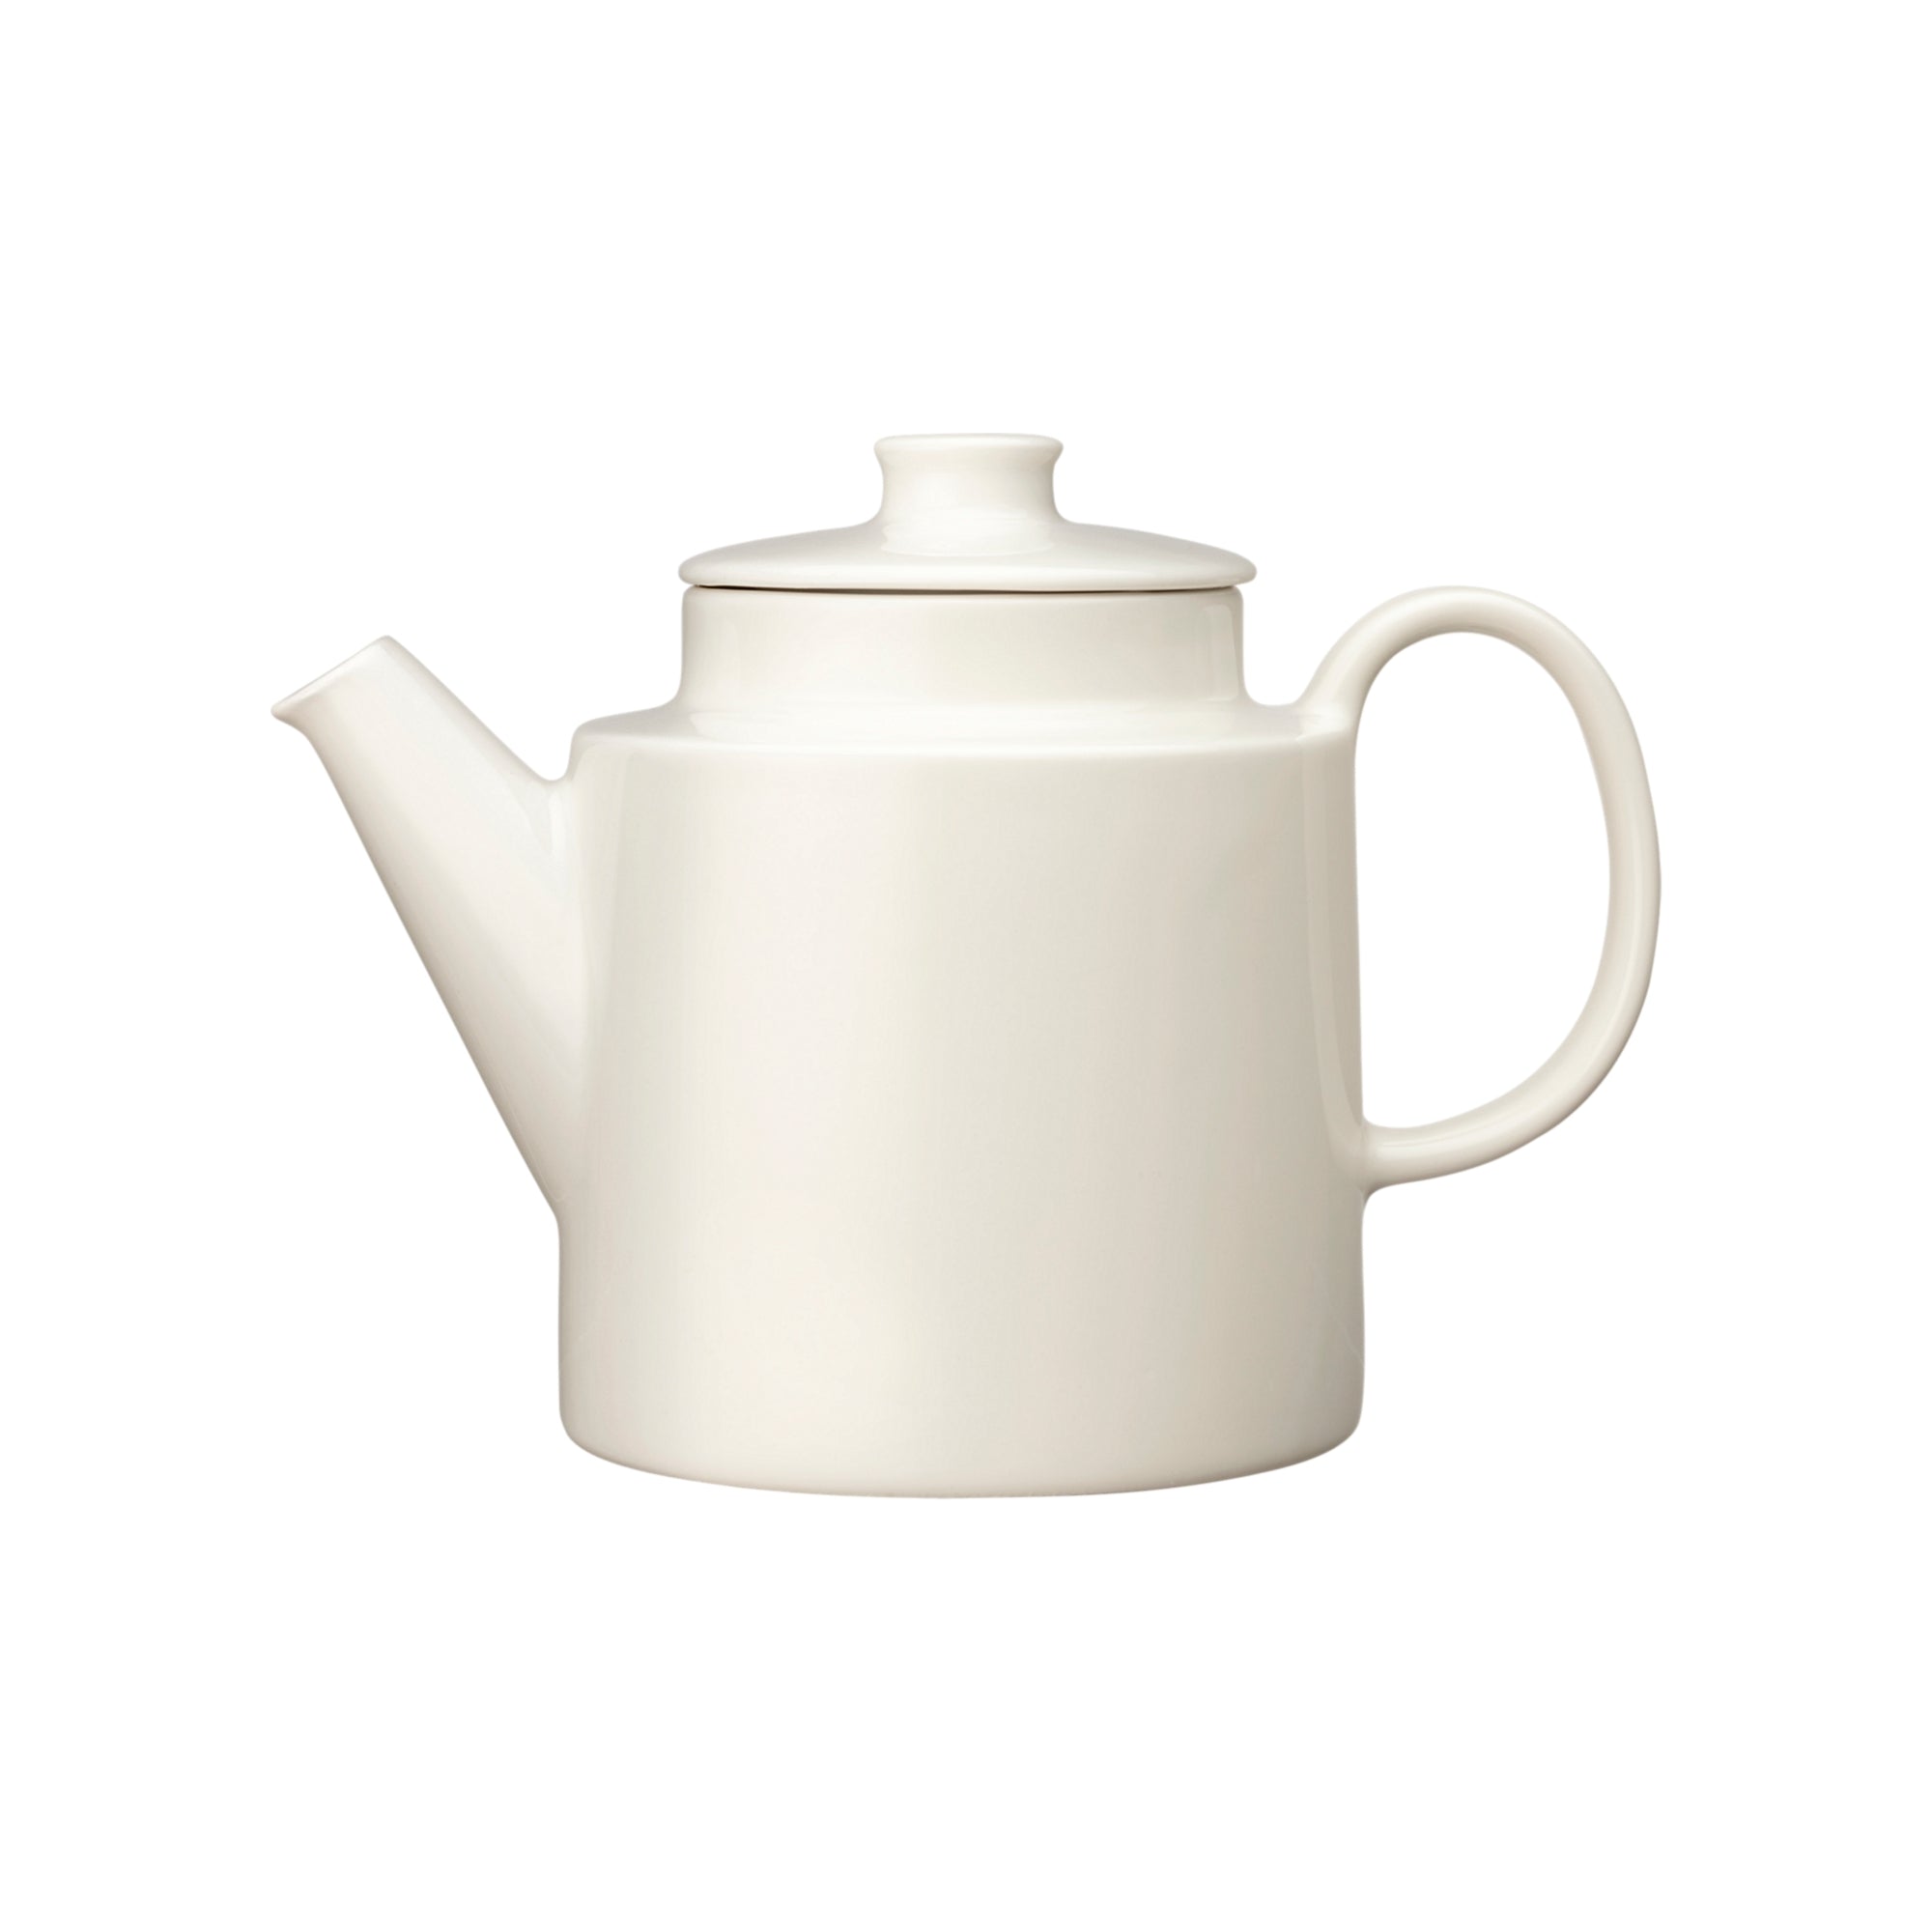 Teema teapot with lid 1,0 l / 1.0qt